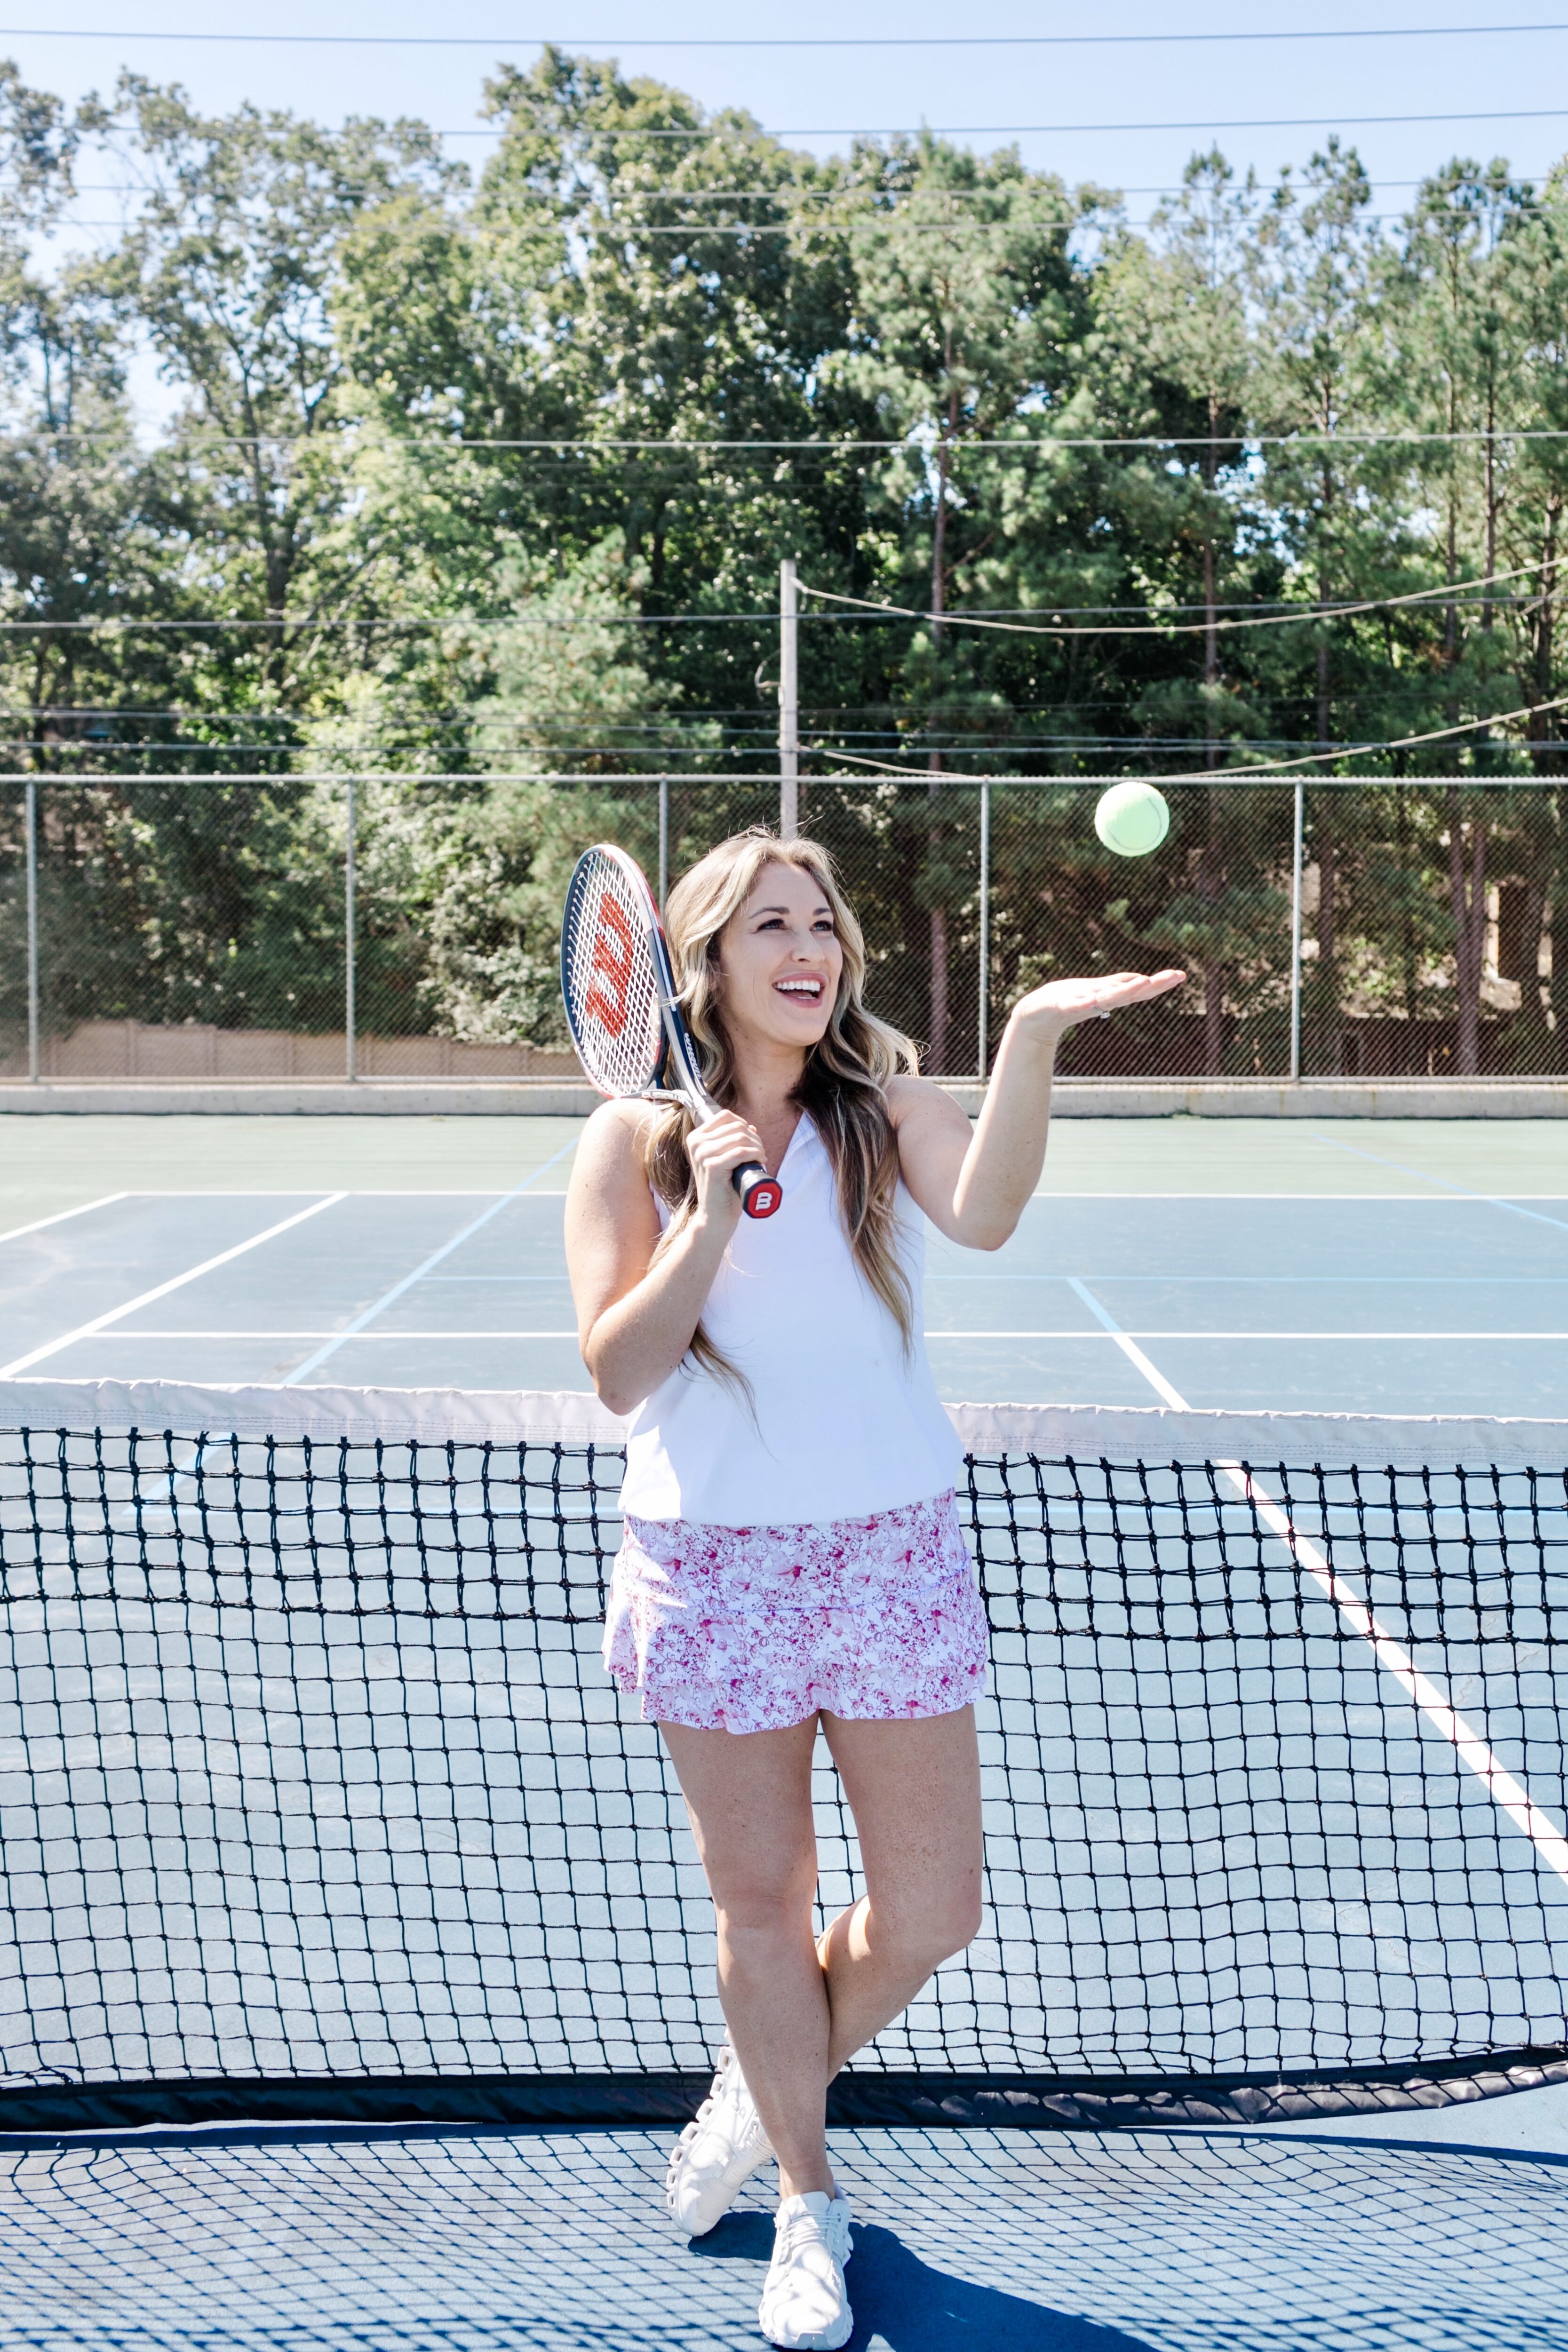 tennis outfits - tennis skirt - tennis polo - workout outfit - tennis skort